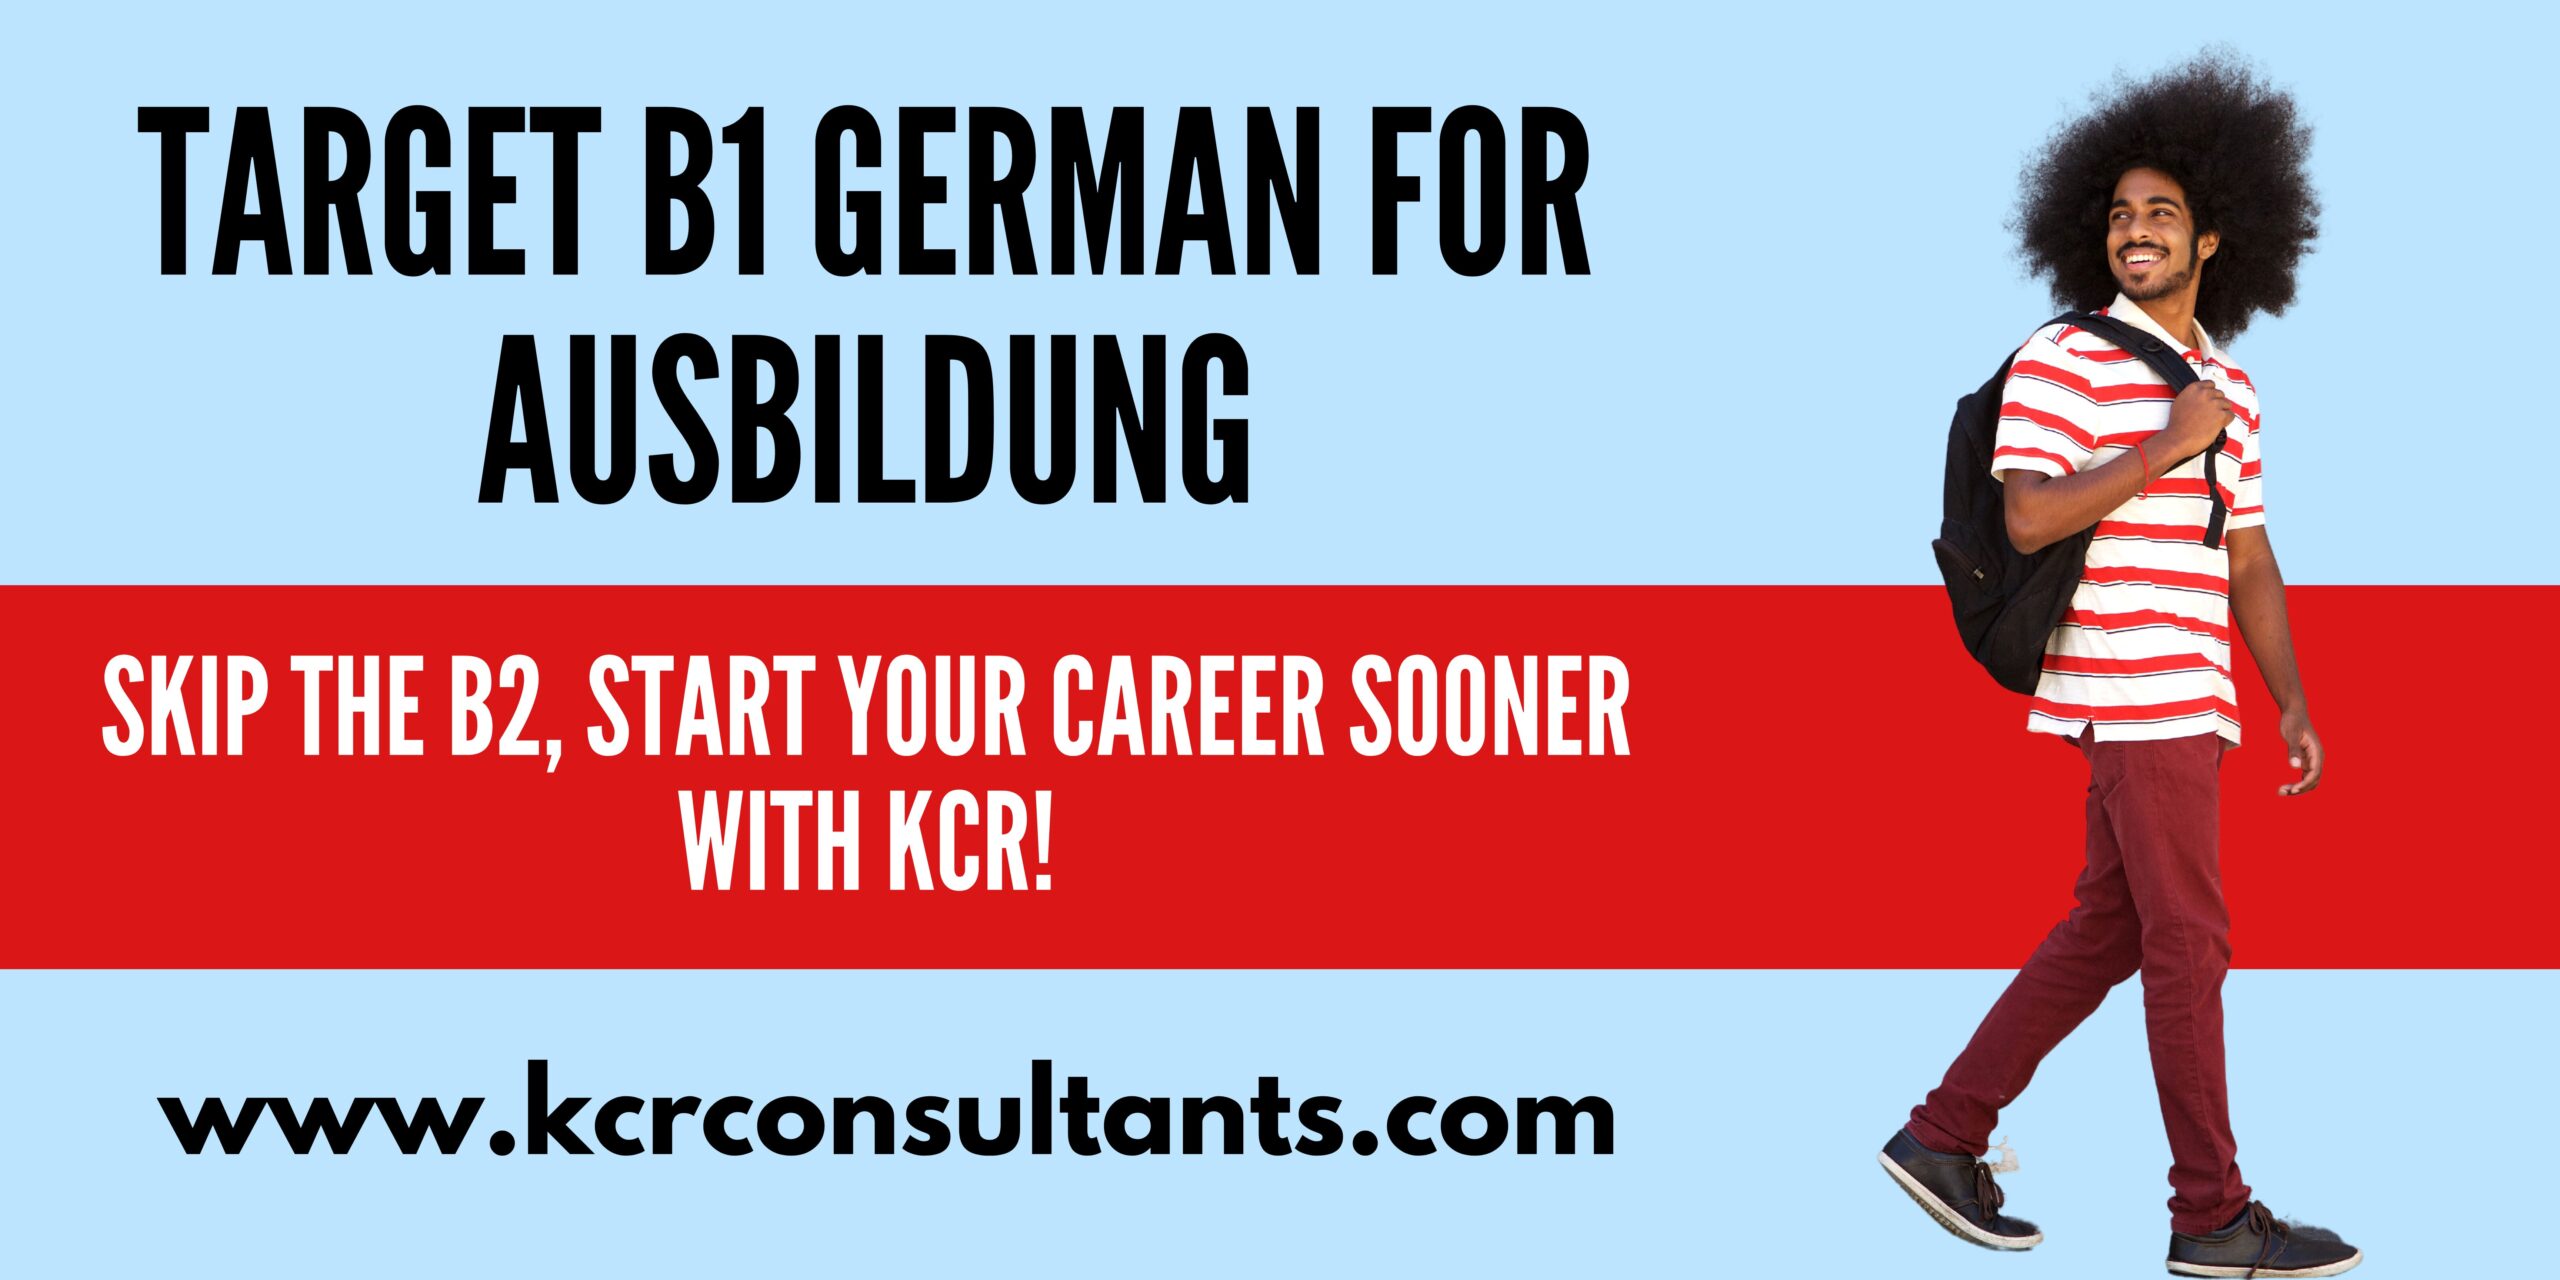 Ausbildung with a B1 level German - KCR CONSULTANTS - you can skip B2